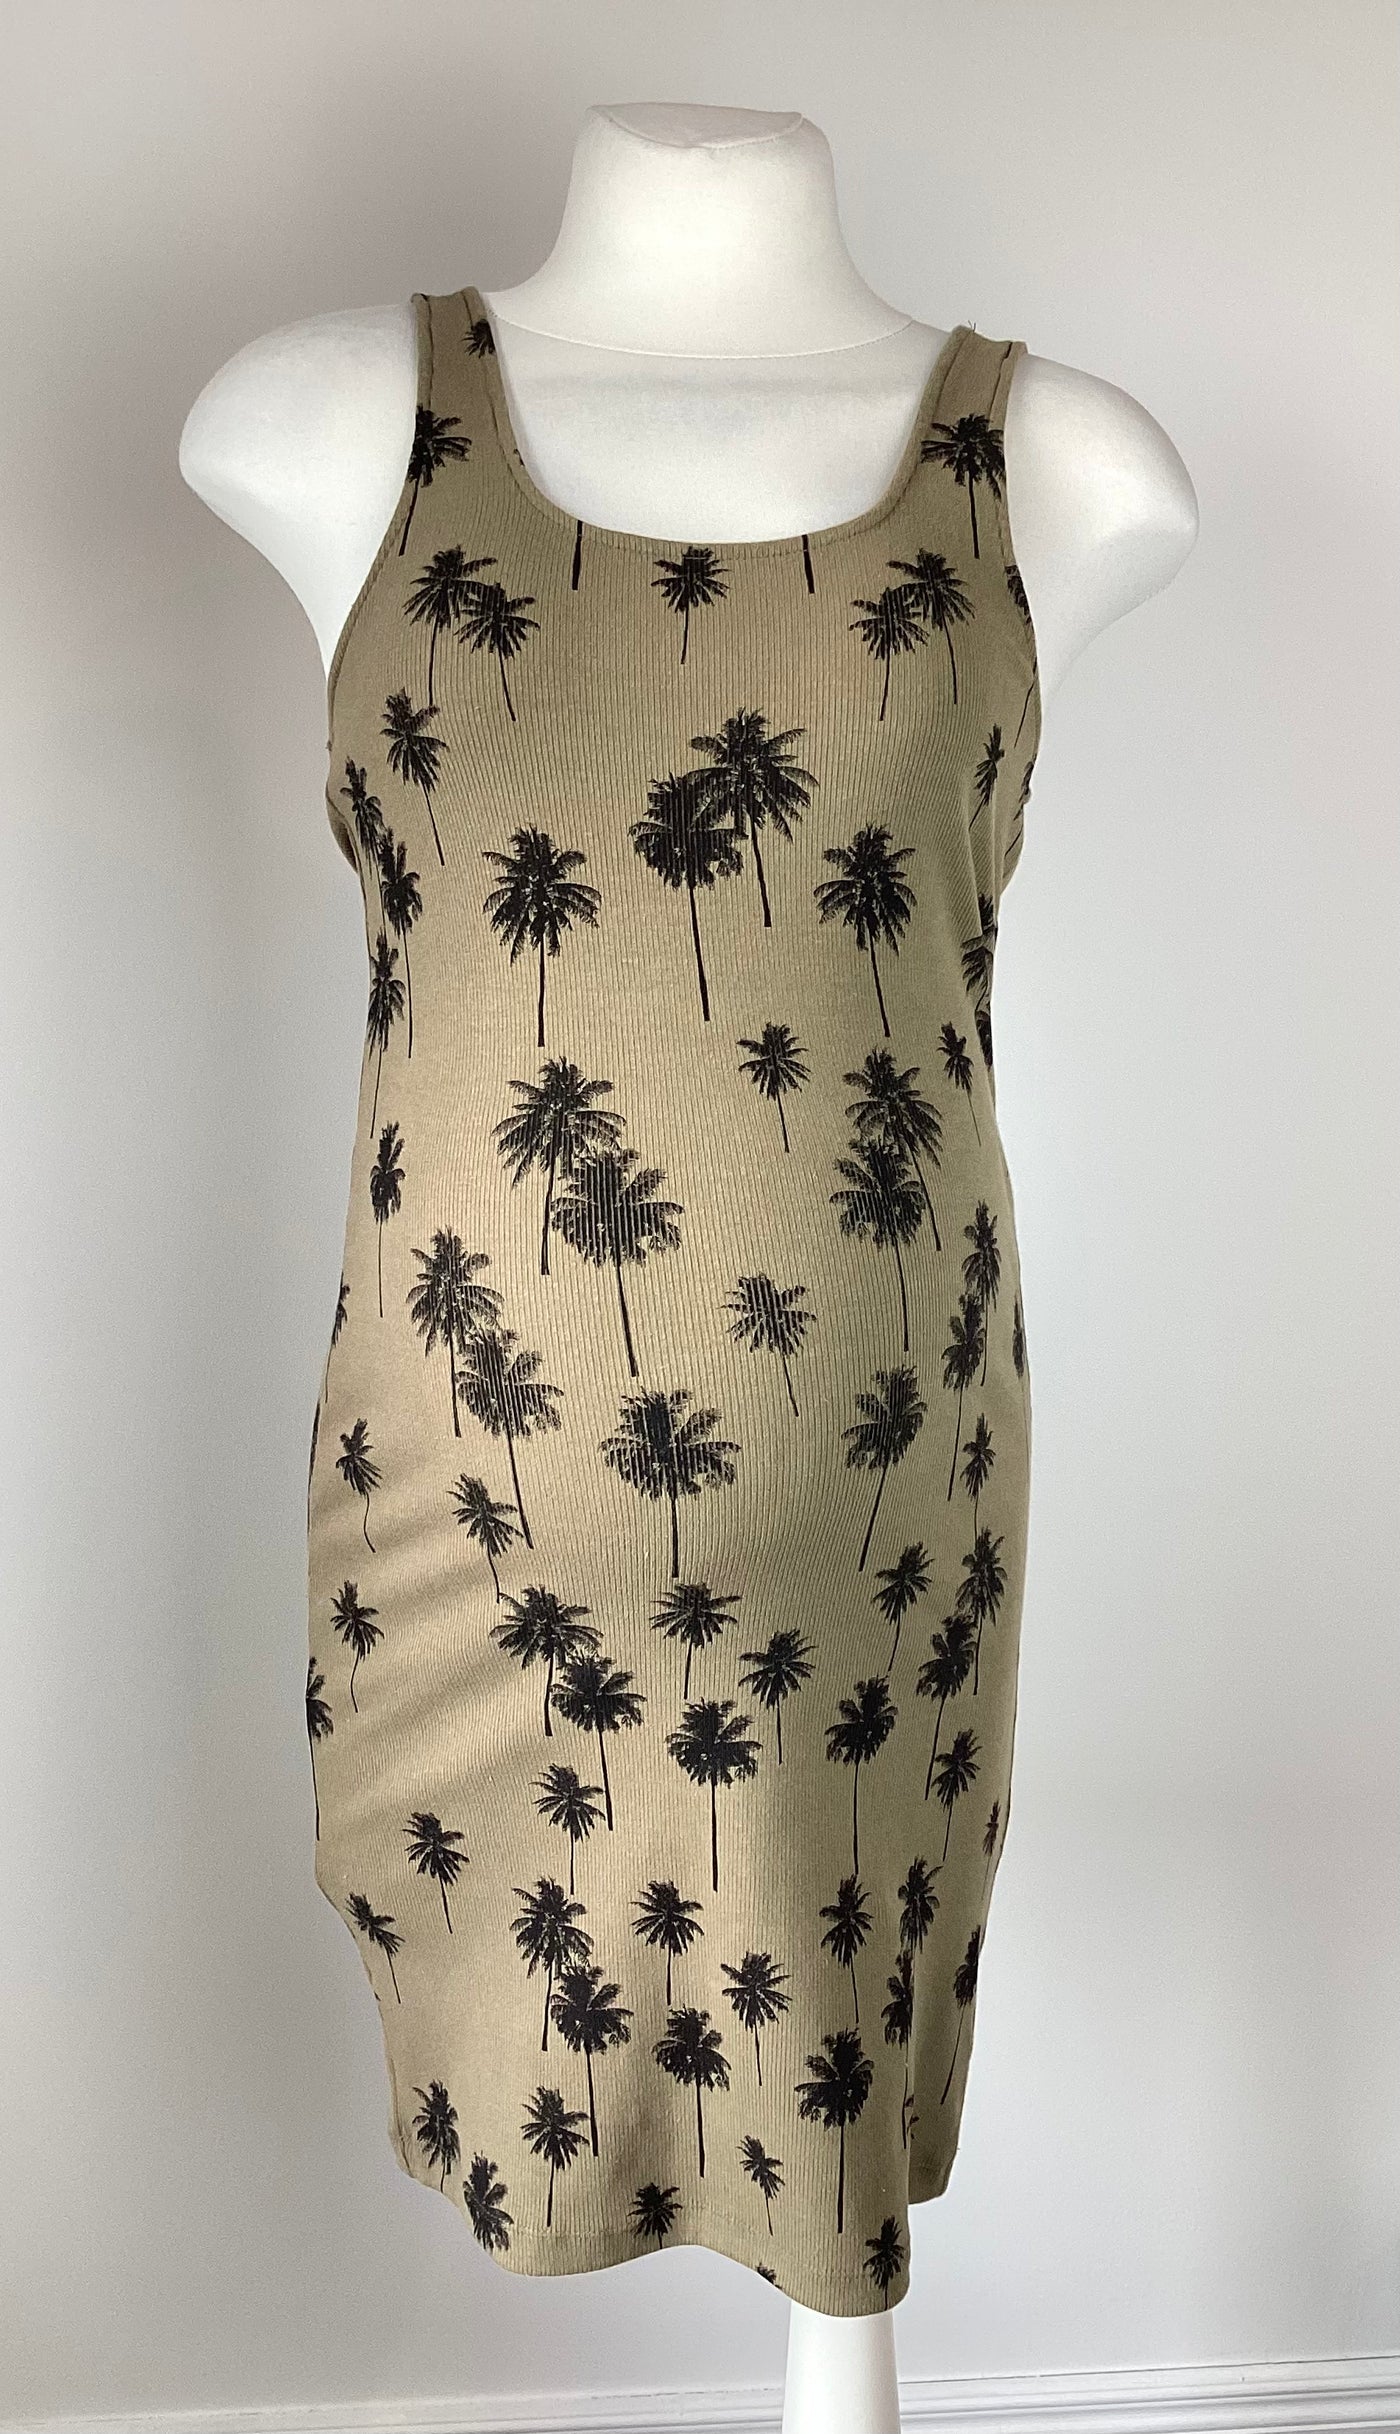 Topshop Maternity khaki & black palm print sleeveless dress- Size 10